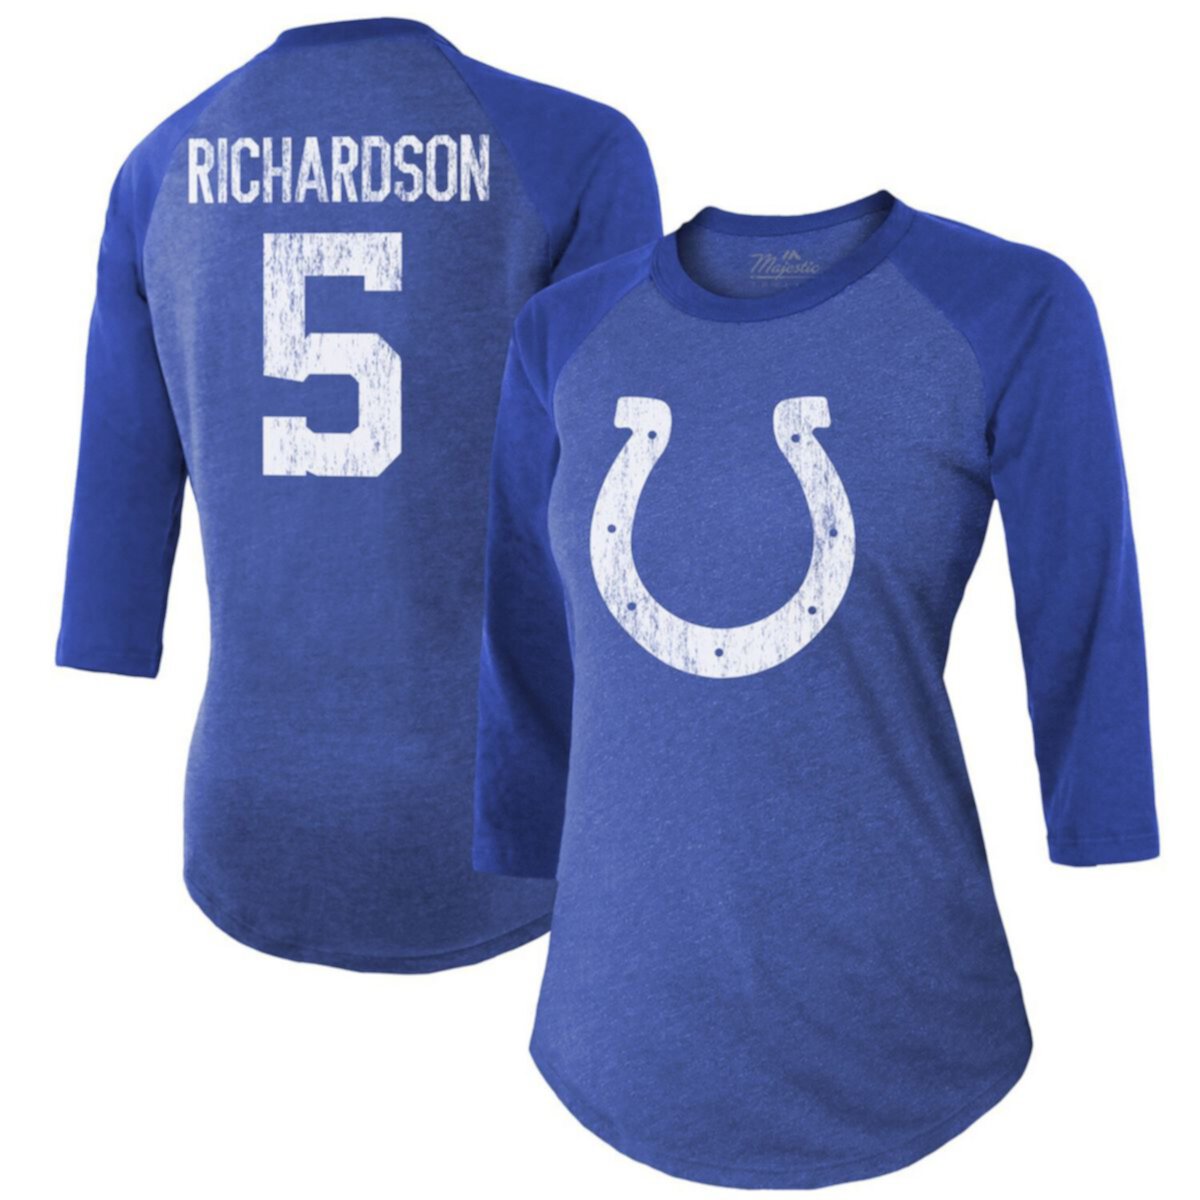 Женская футболка Majestic Threads Anthony Richardson Royal Indianapolis Colts с именем и номером игрока, трехцветная футболка с рукавами 3/4 Majestic Threads